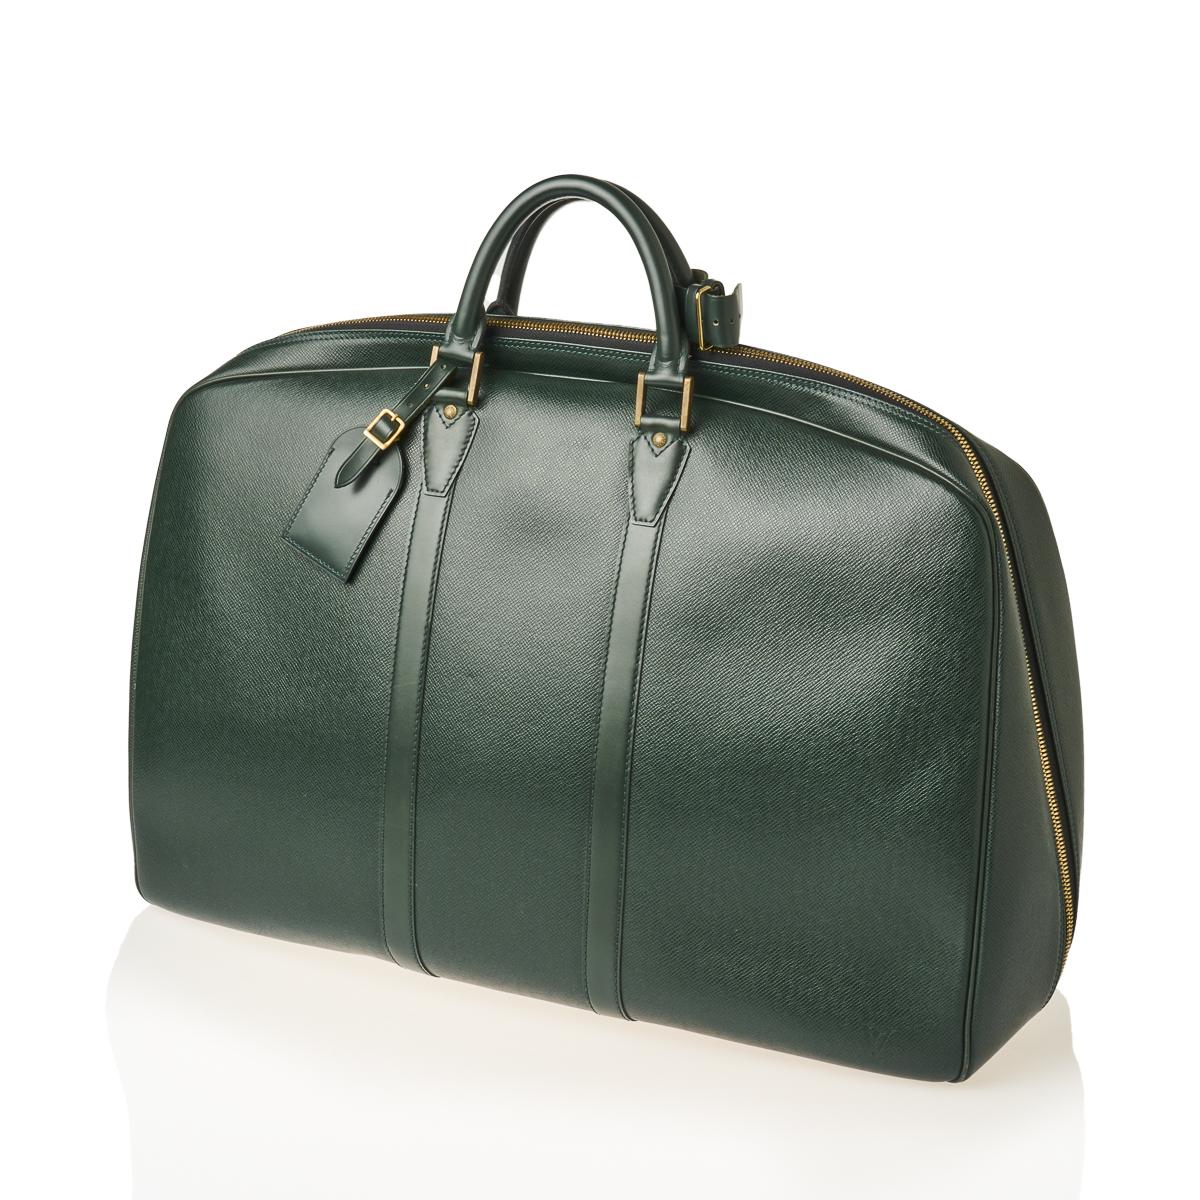 Sold at Auction: Louis Vuitton 5 Hangers Garment Bag travel bag luggage